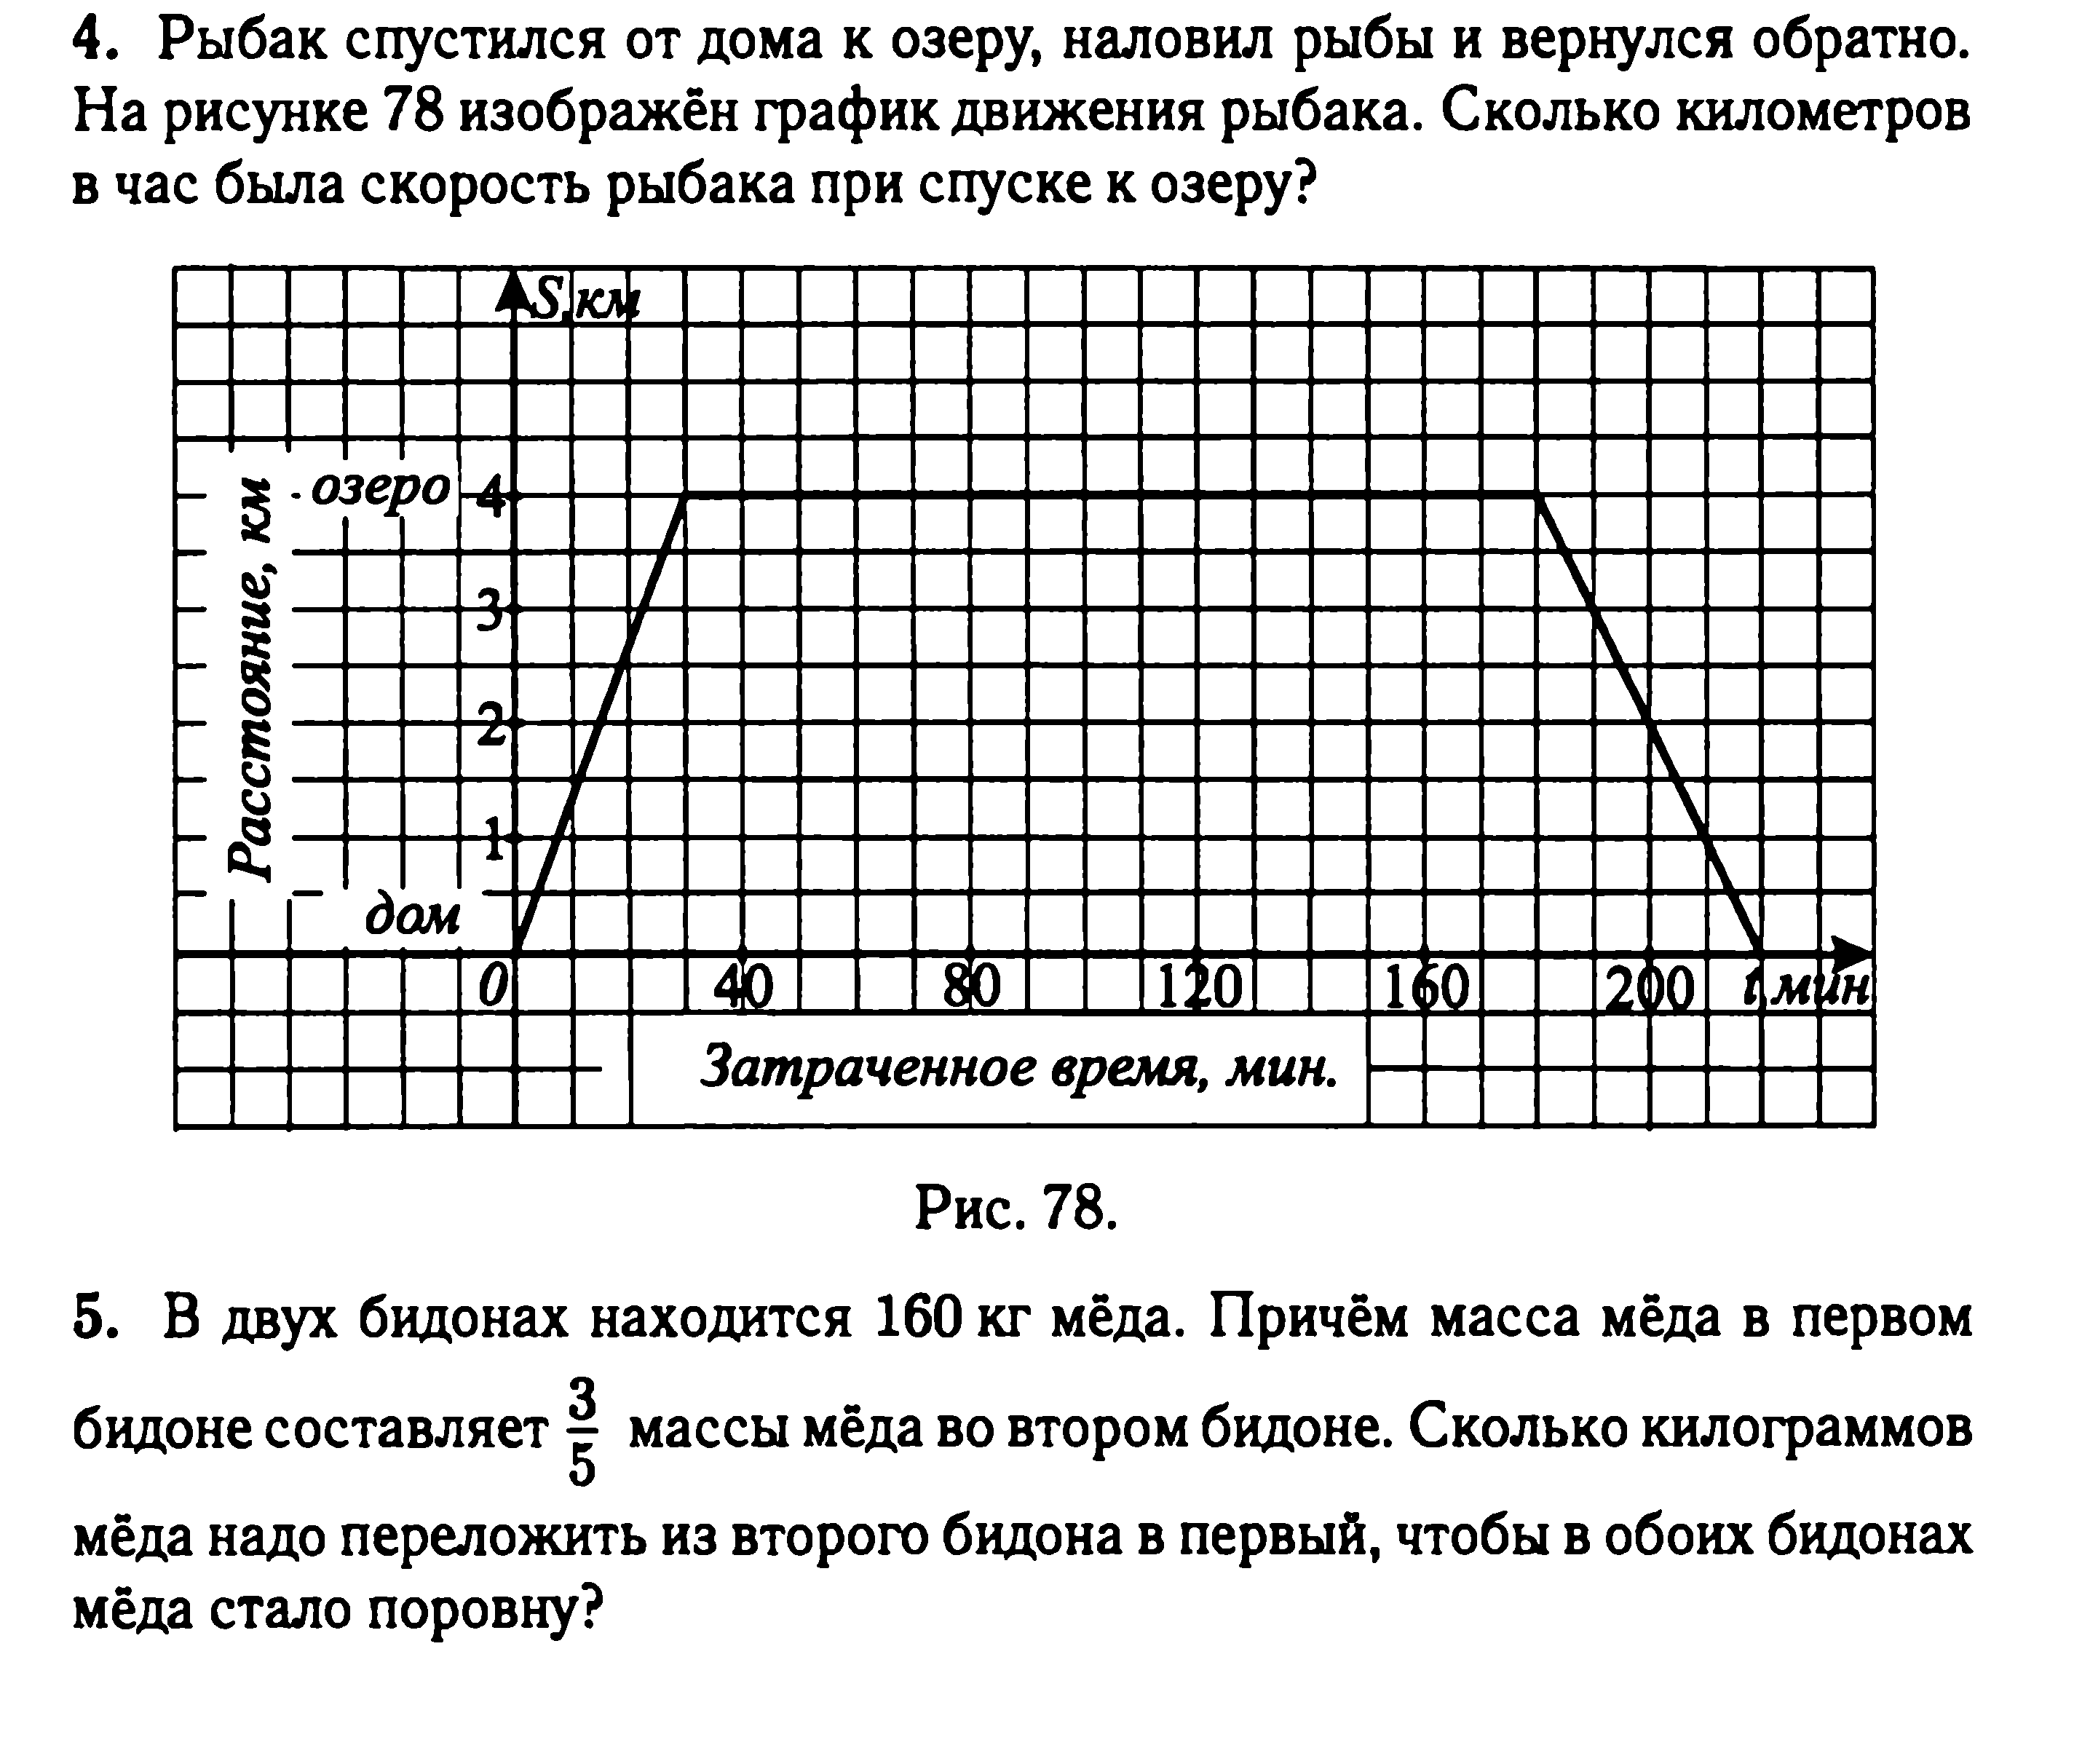 Рабочая программа по математике 6 класс.к УМК И.И.Зубарева, И.И.Мордкович.